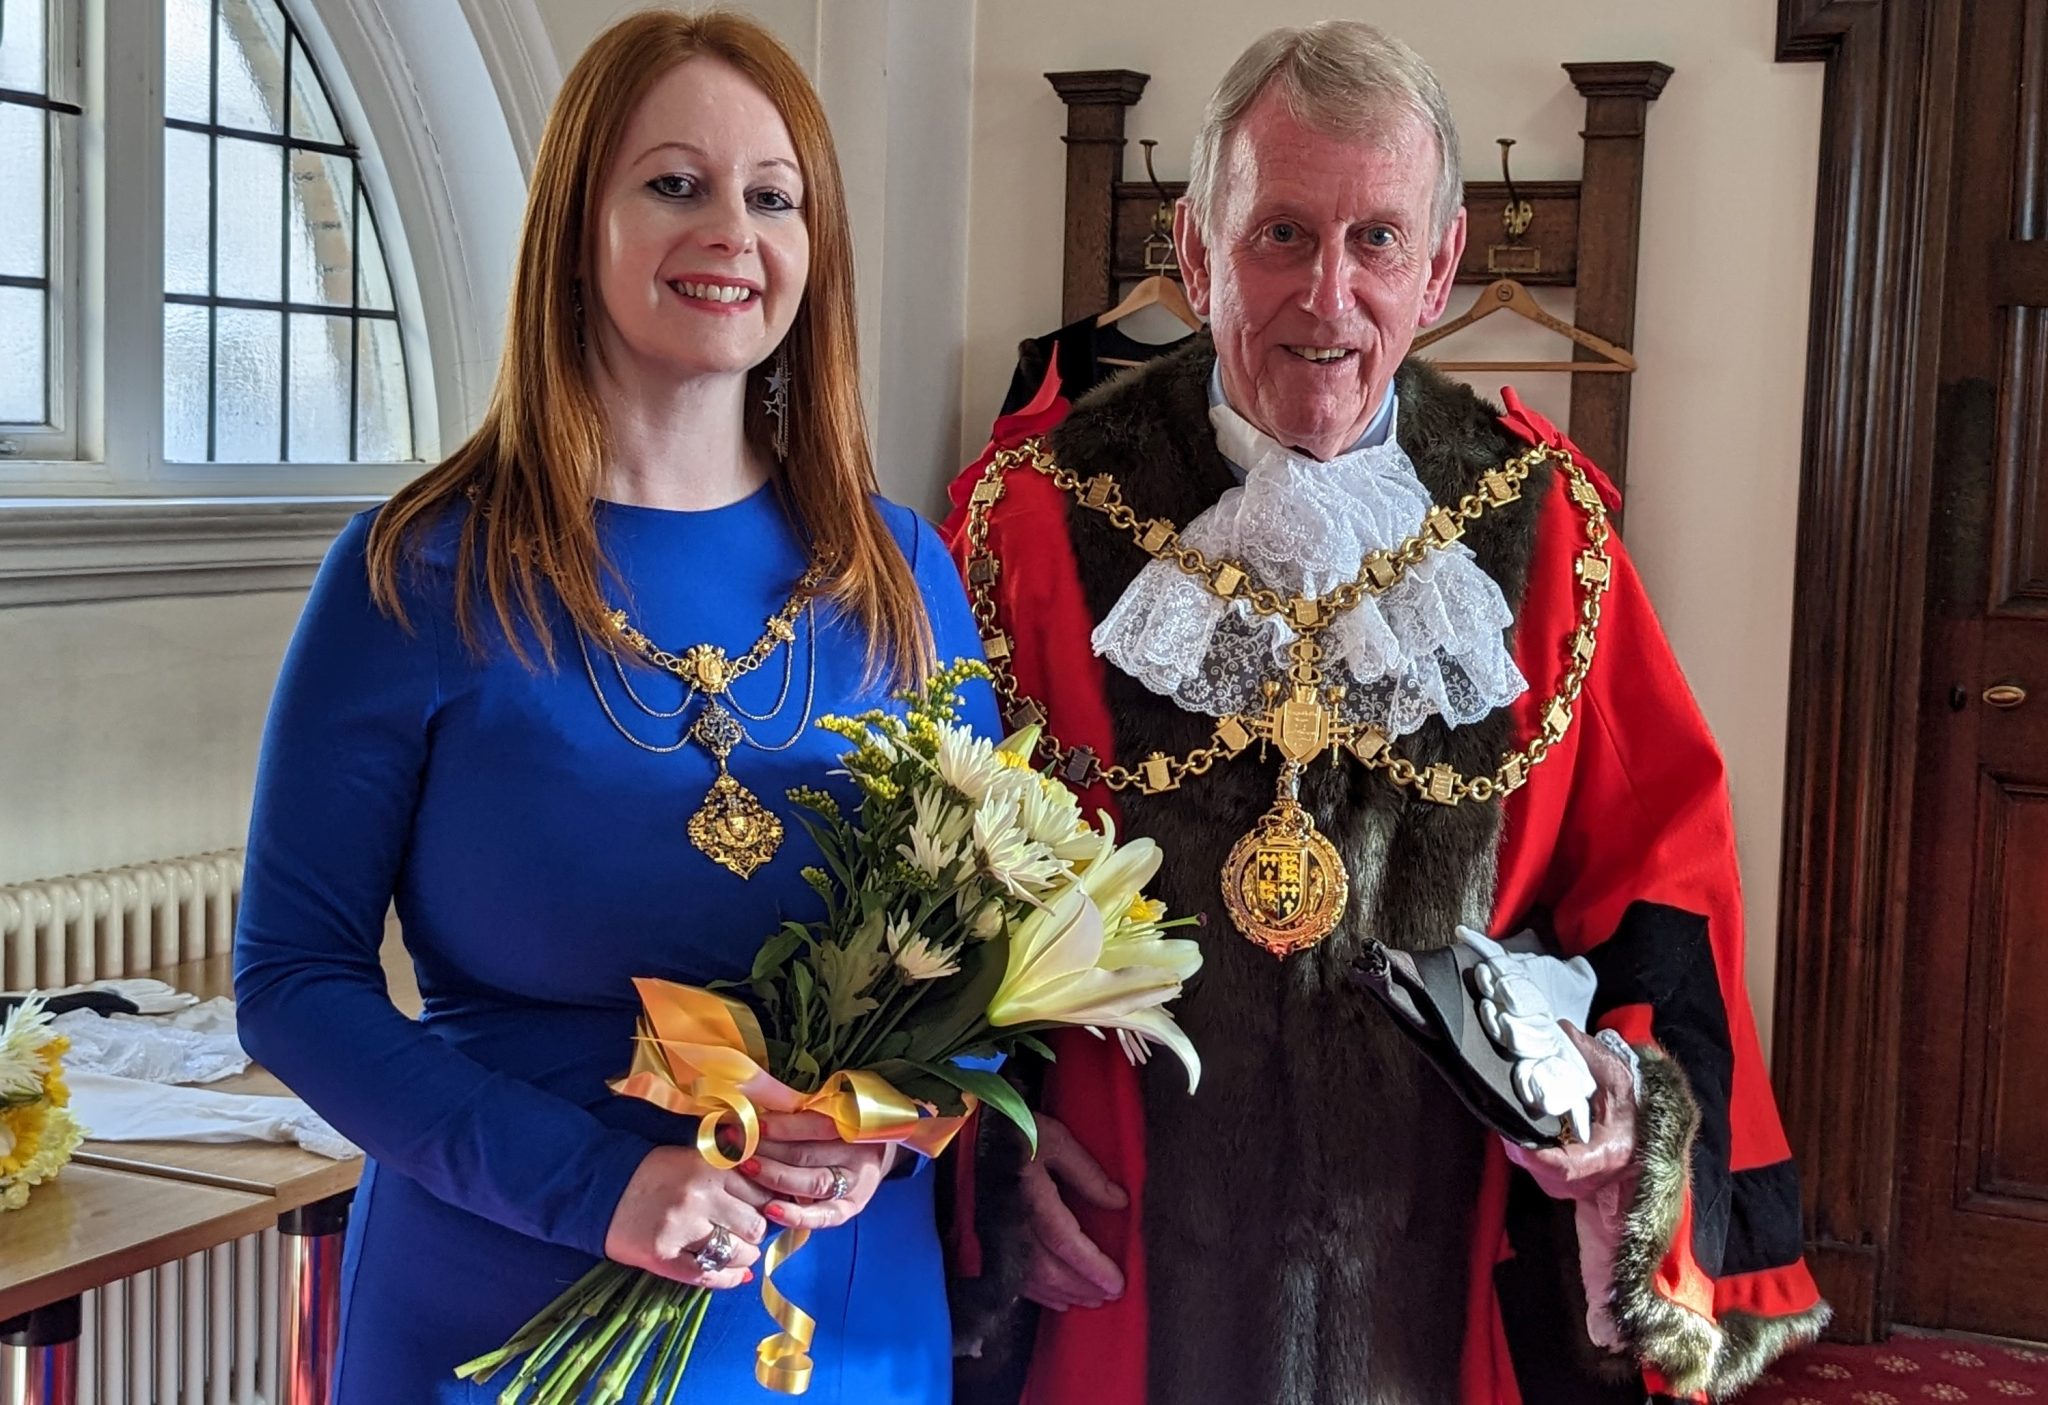 The Mayor and Mayoress of Walsall